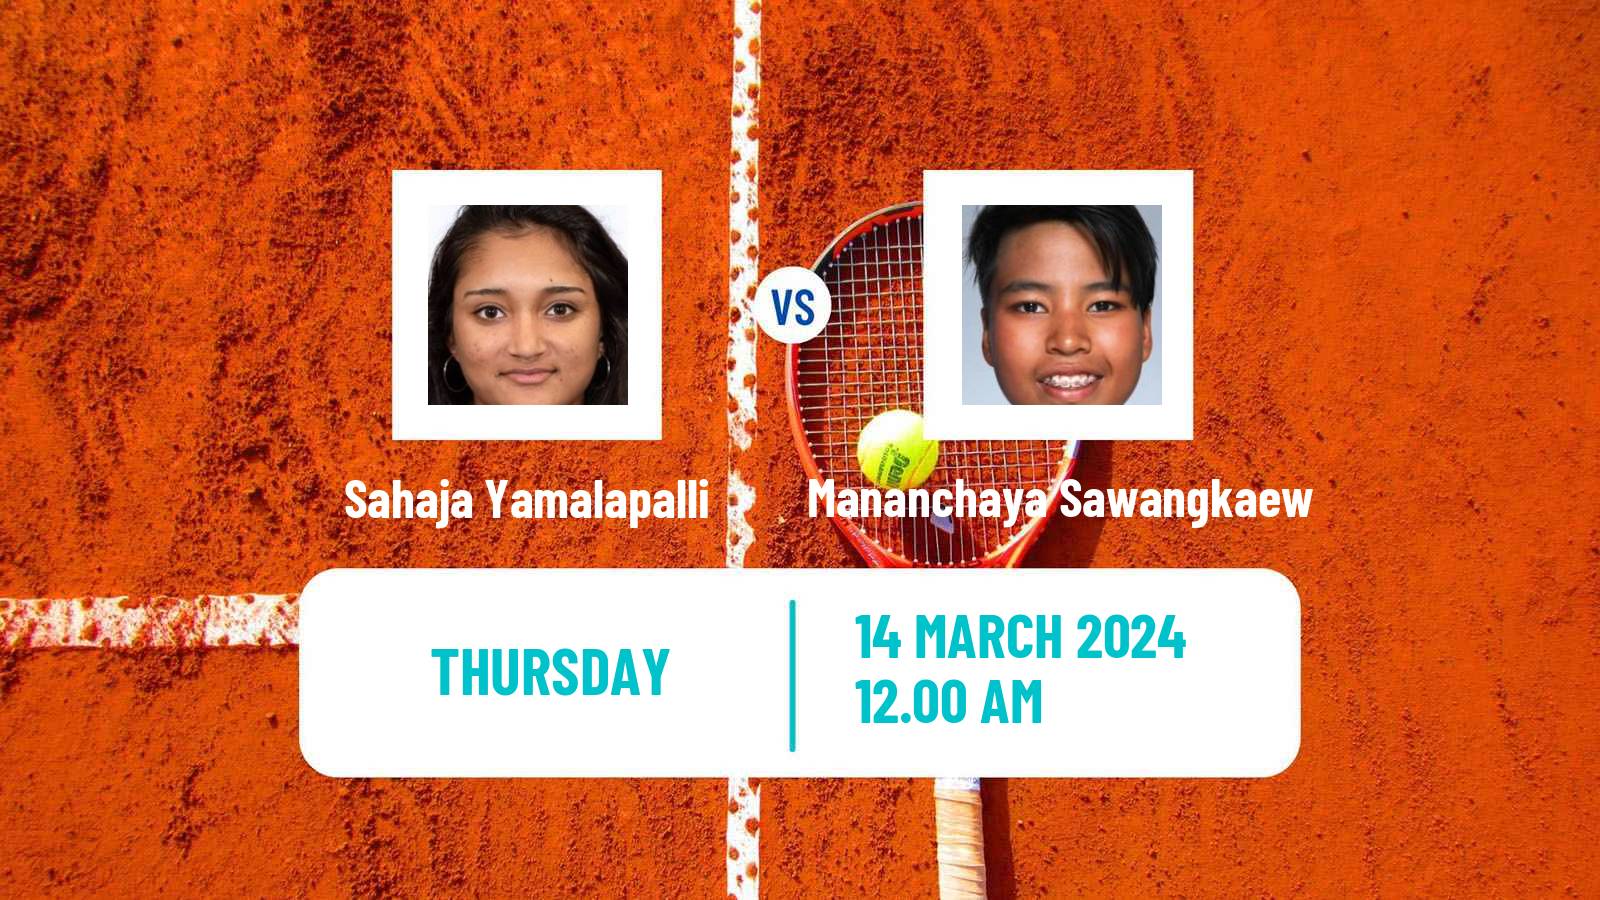 Tennis ITF W35 Indore Women Sahaja Yamalapalli - Mananchaya Sawangkaew